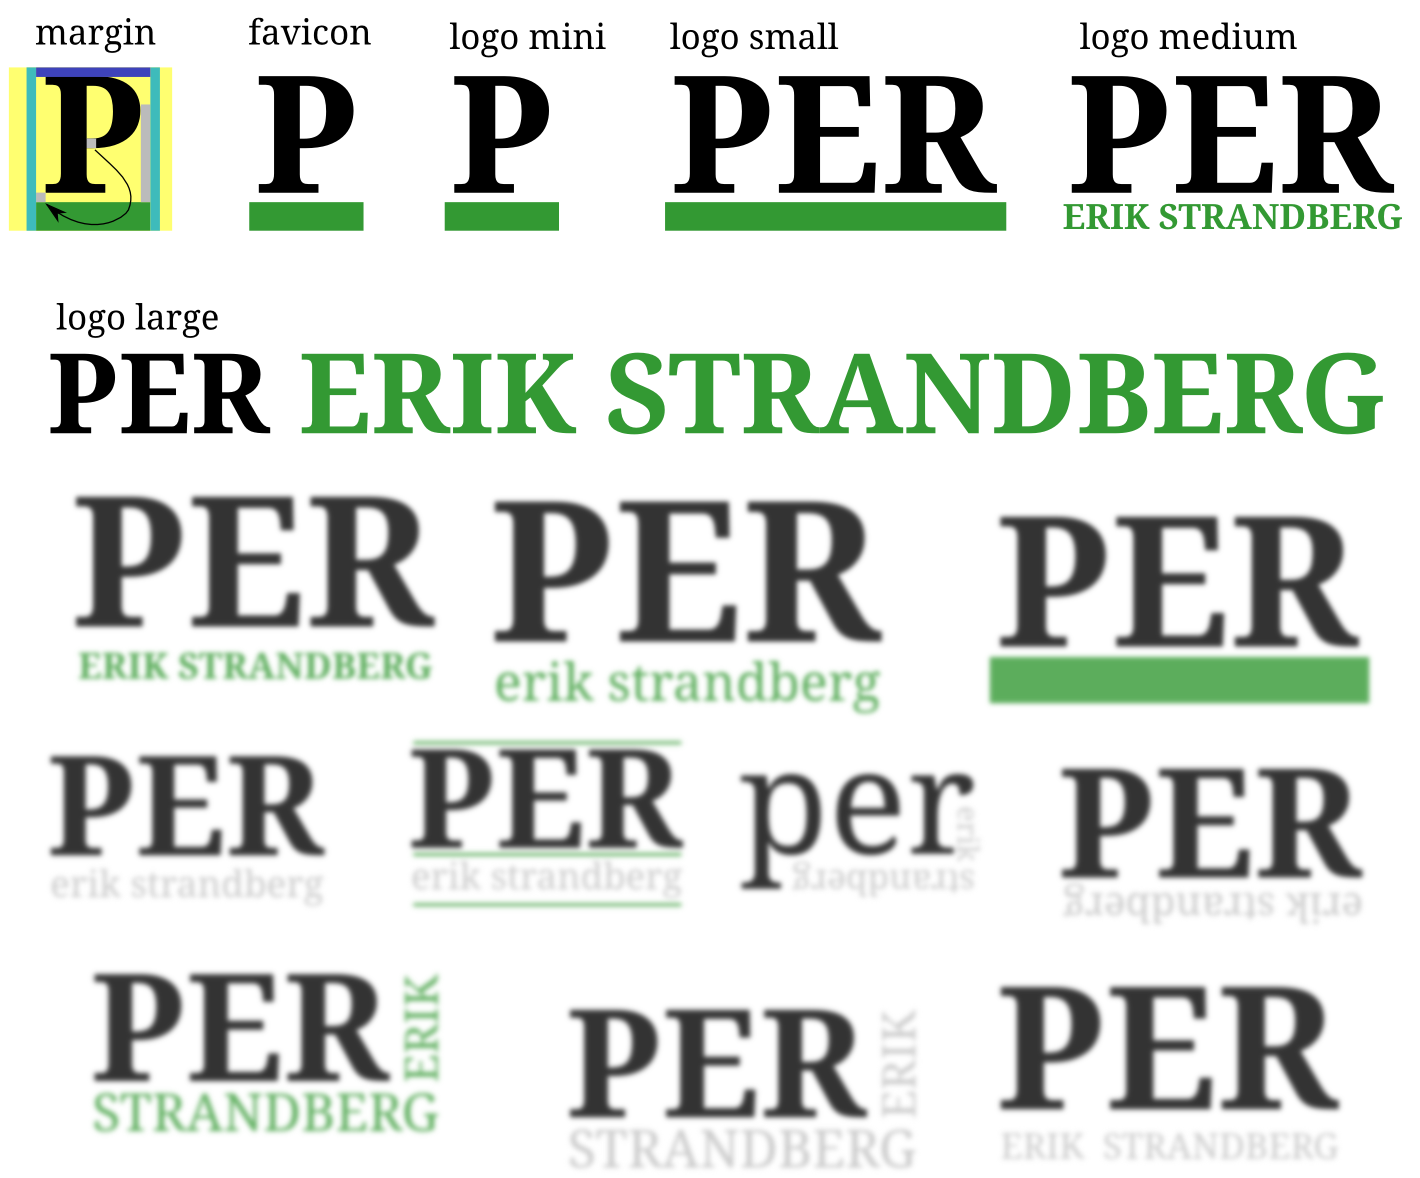 http://www.pererikstrandberg.se/grafisk-profil/per-wordmark.png